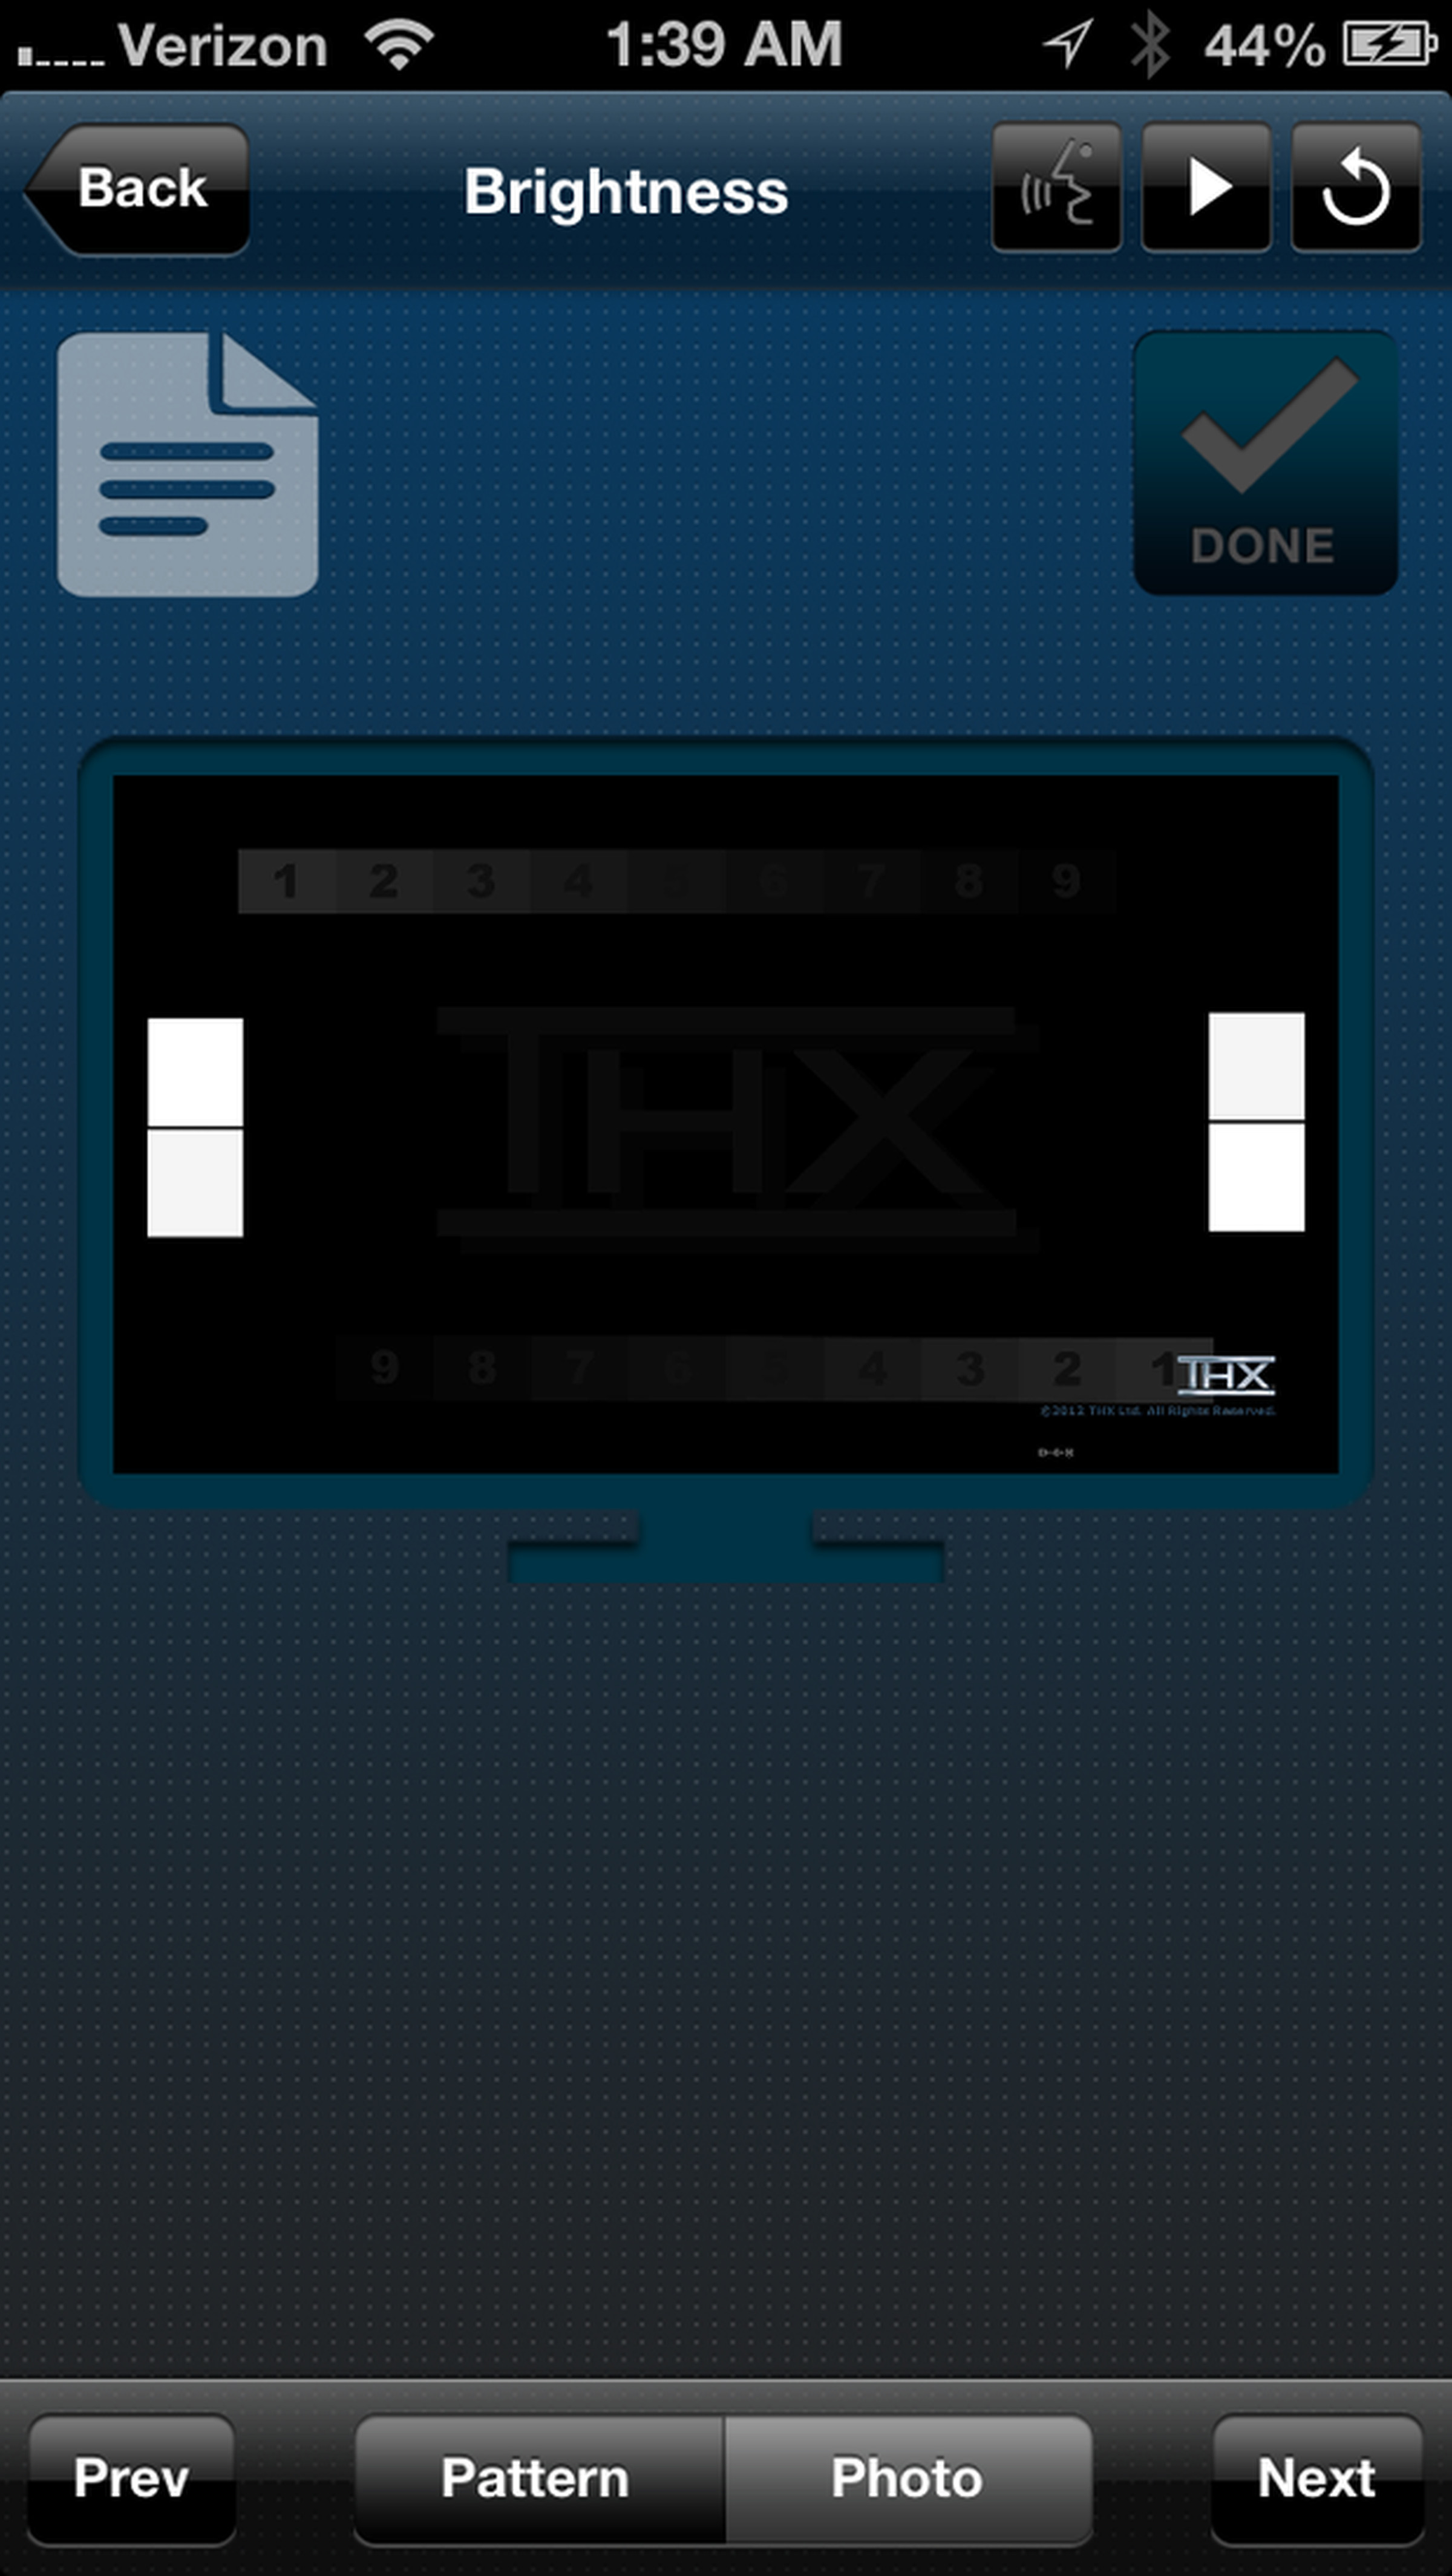 THX Tune-Up iOS app screenshots